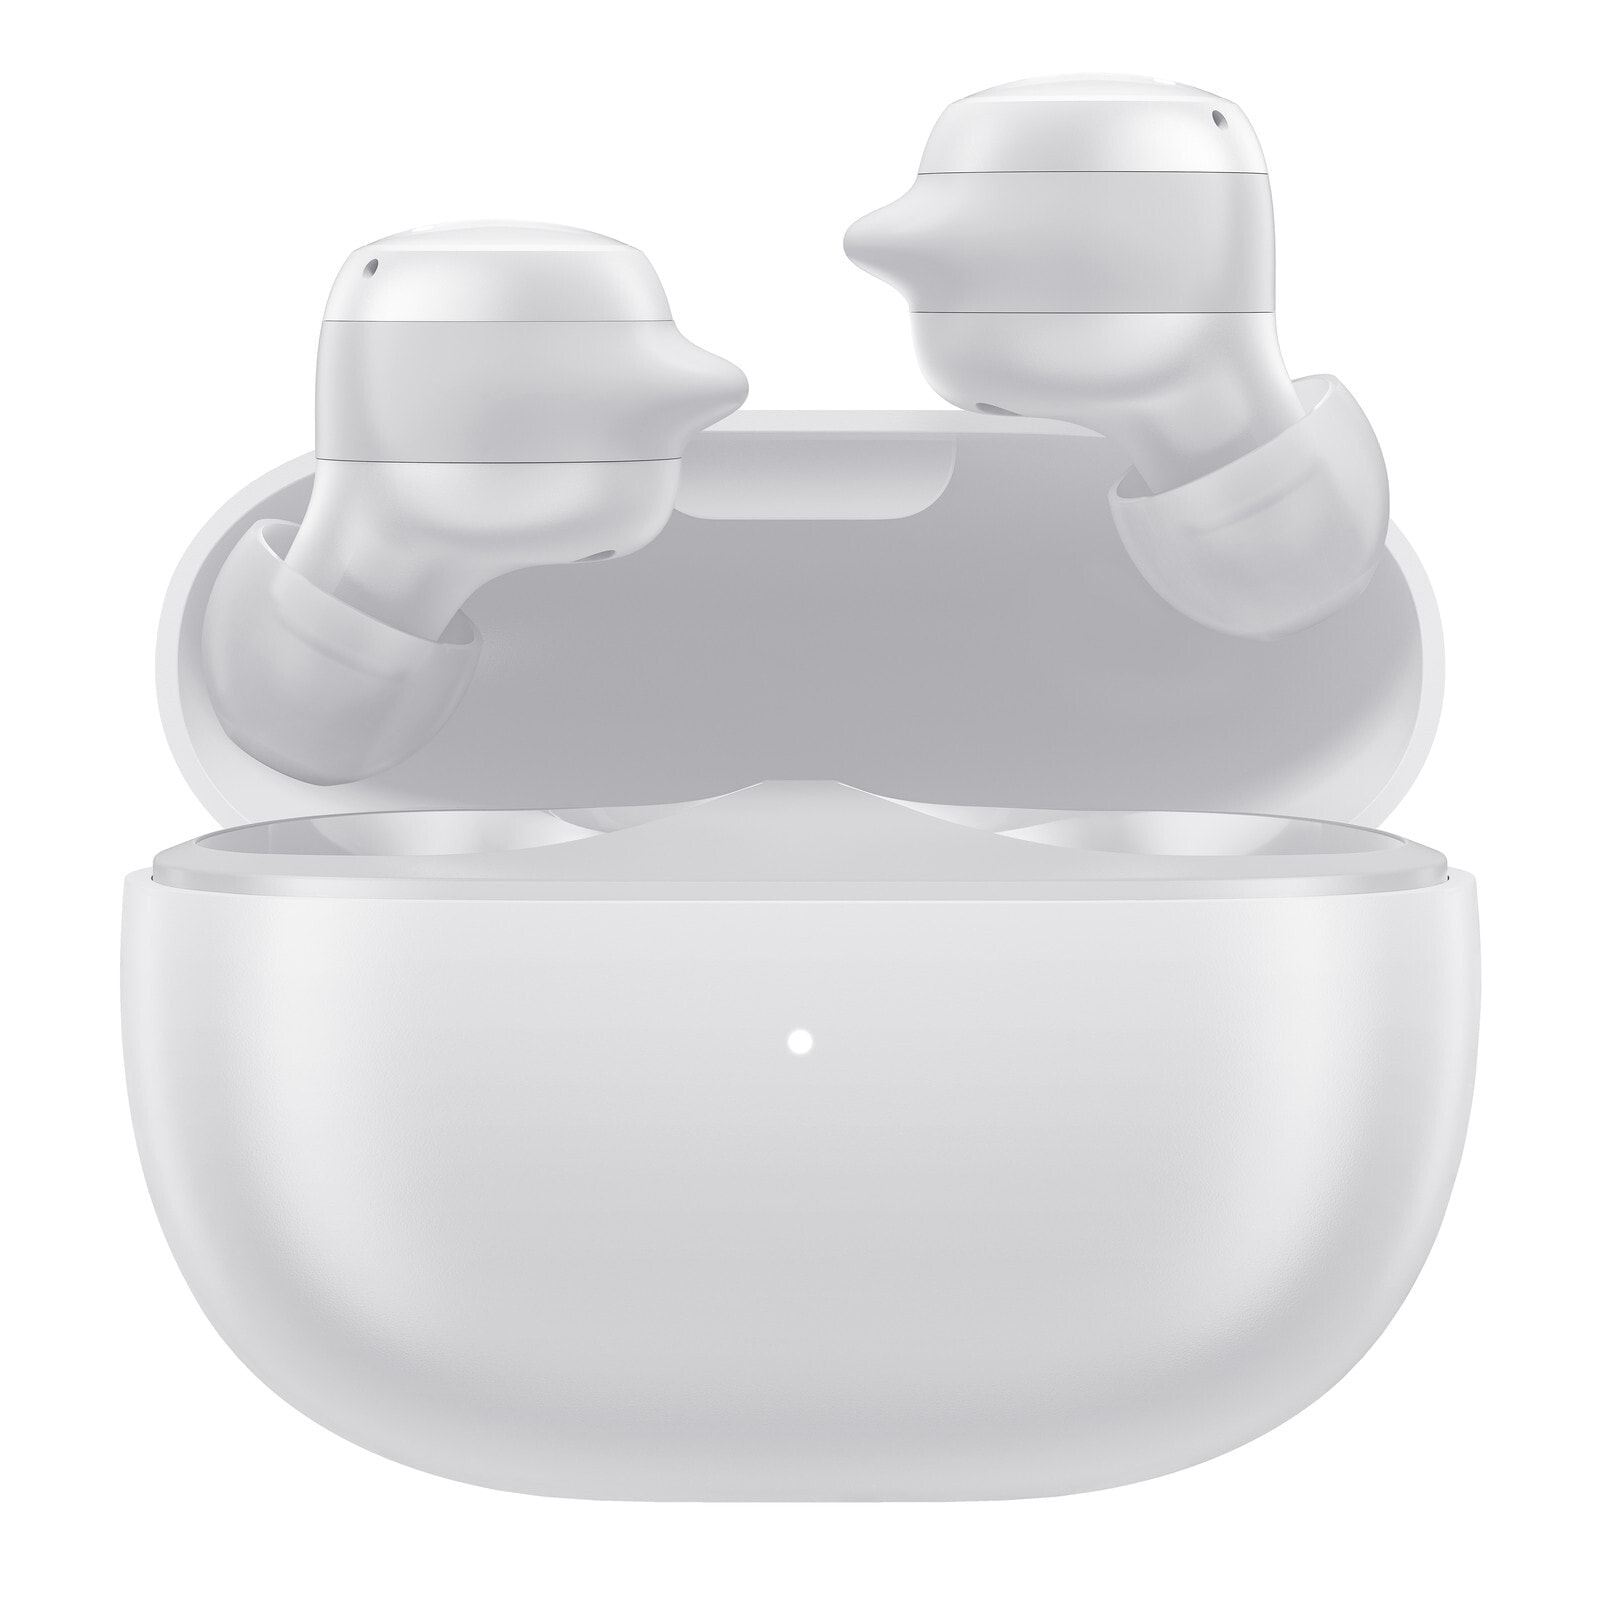 Bluetooth 5.2, 36mAh(earbud), 315mAh(charging case), IP54, USB Type-C, 4.2g(earbud) / 36g(total)